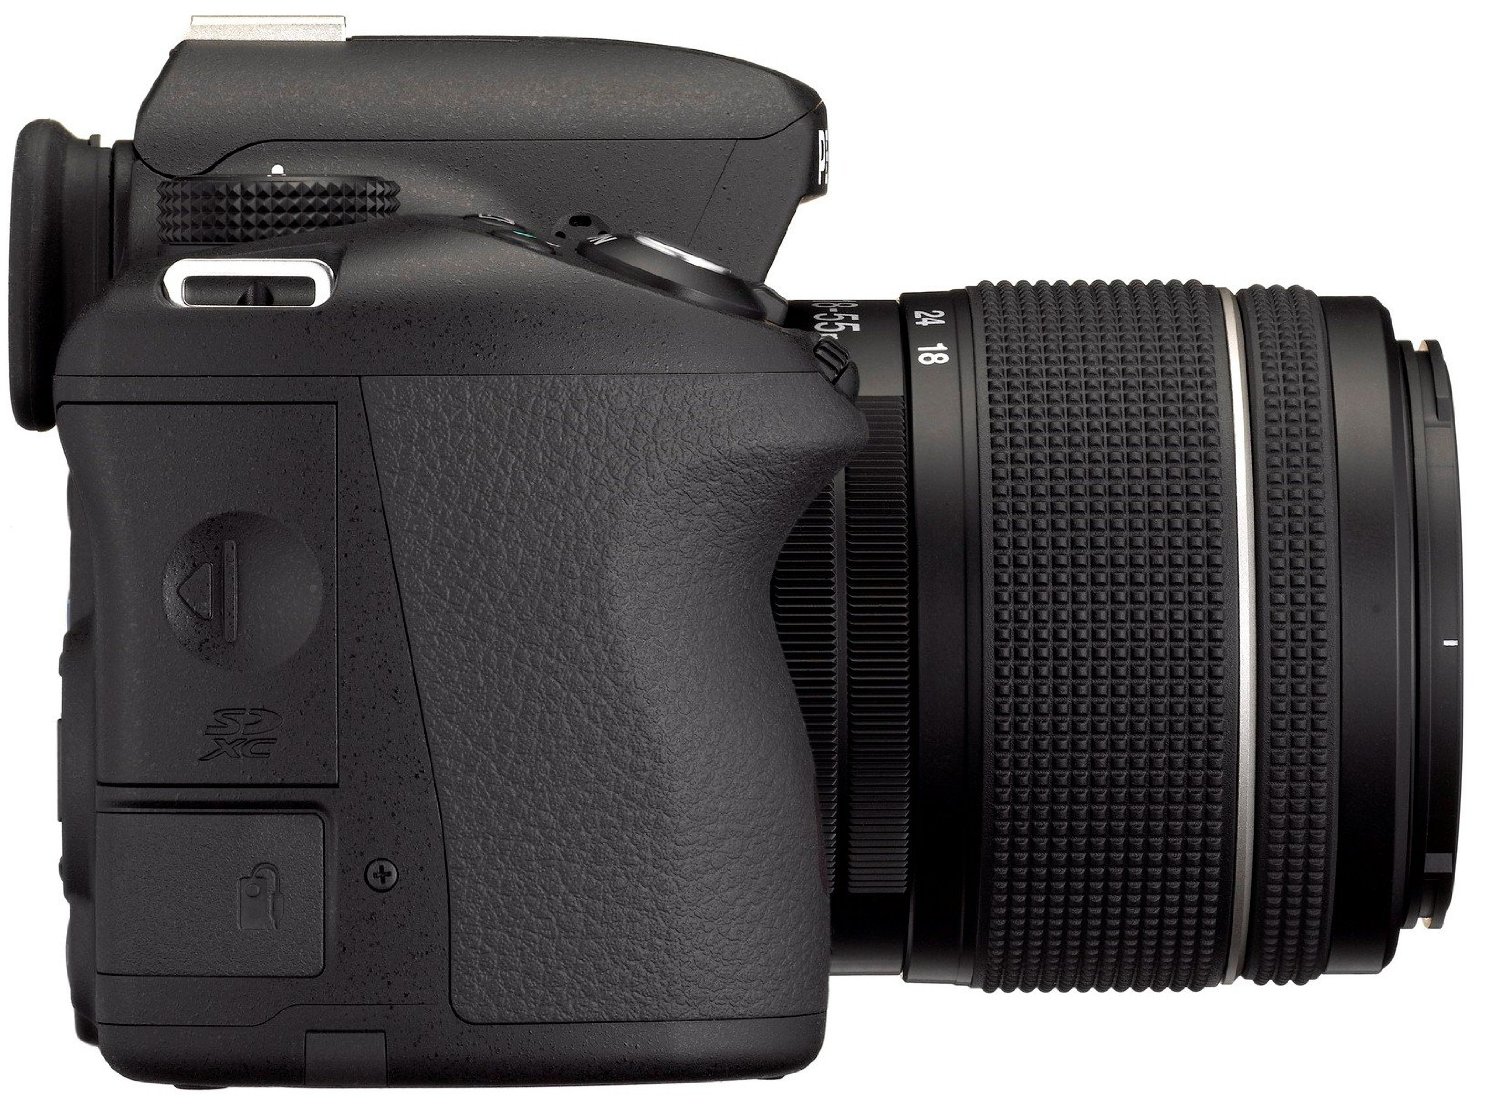 Pentax K-50 DSLR Camera with DAL 18-55 mm WR Lens Kit, 3 inch LCD - Black